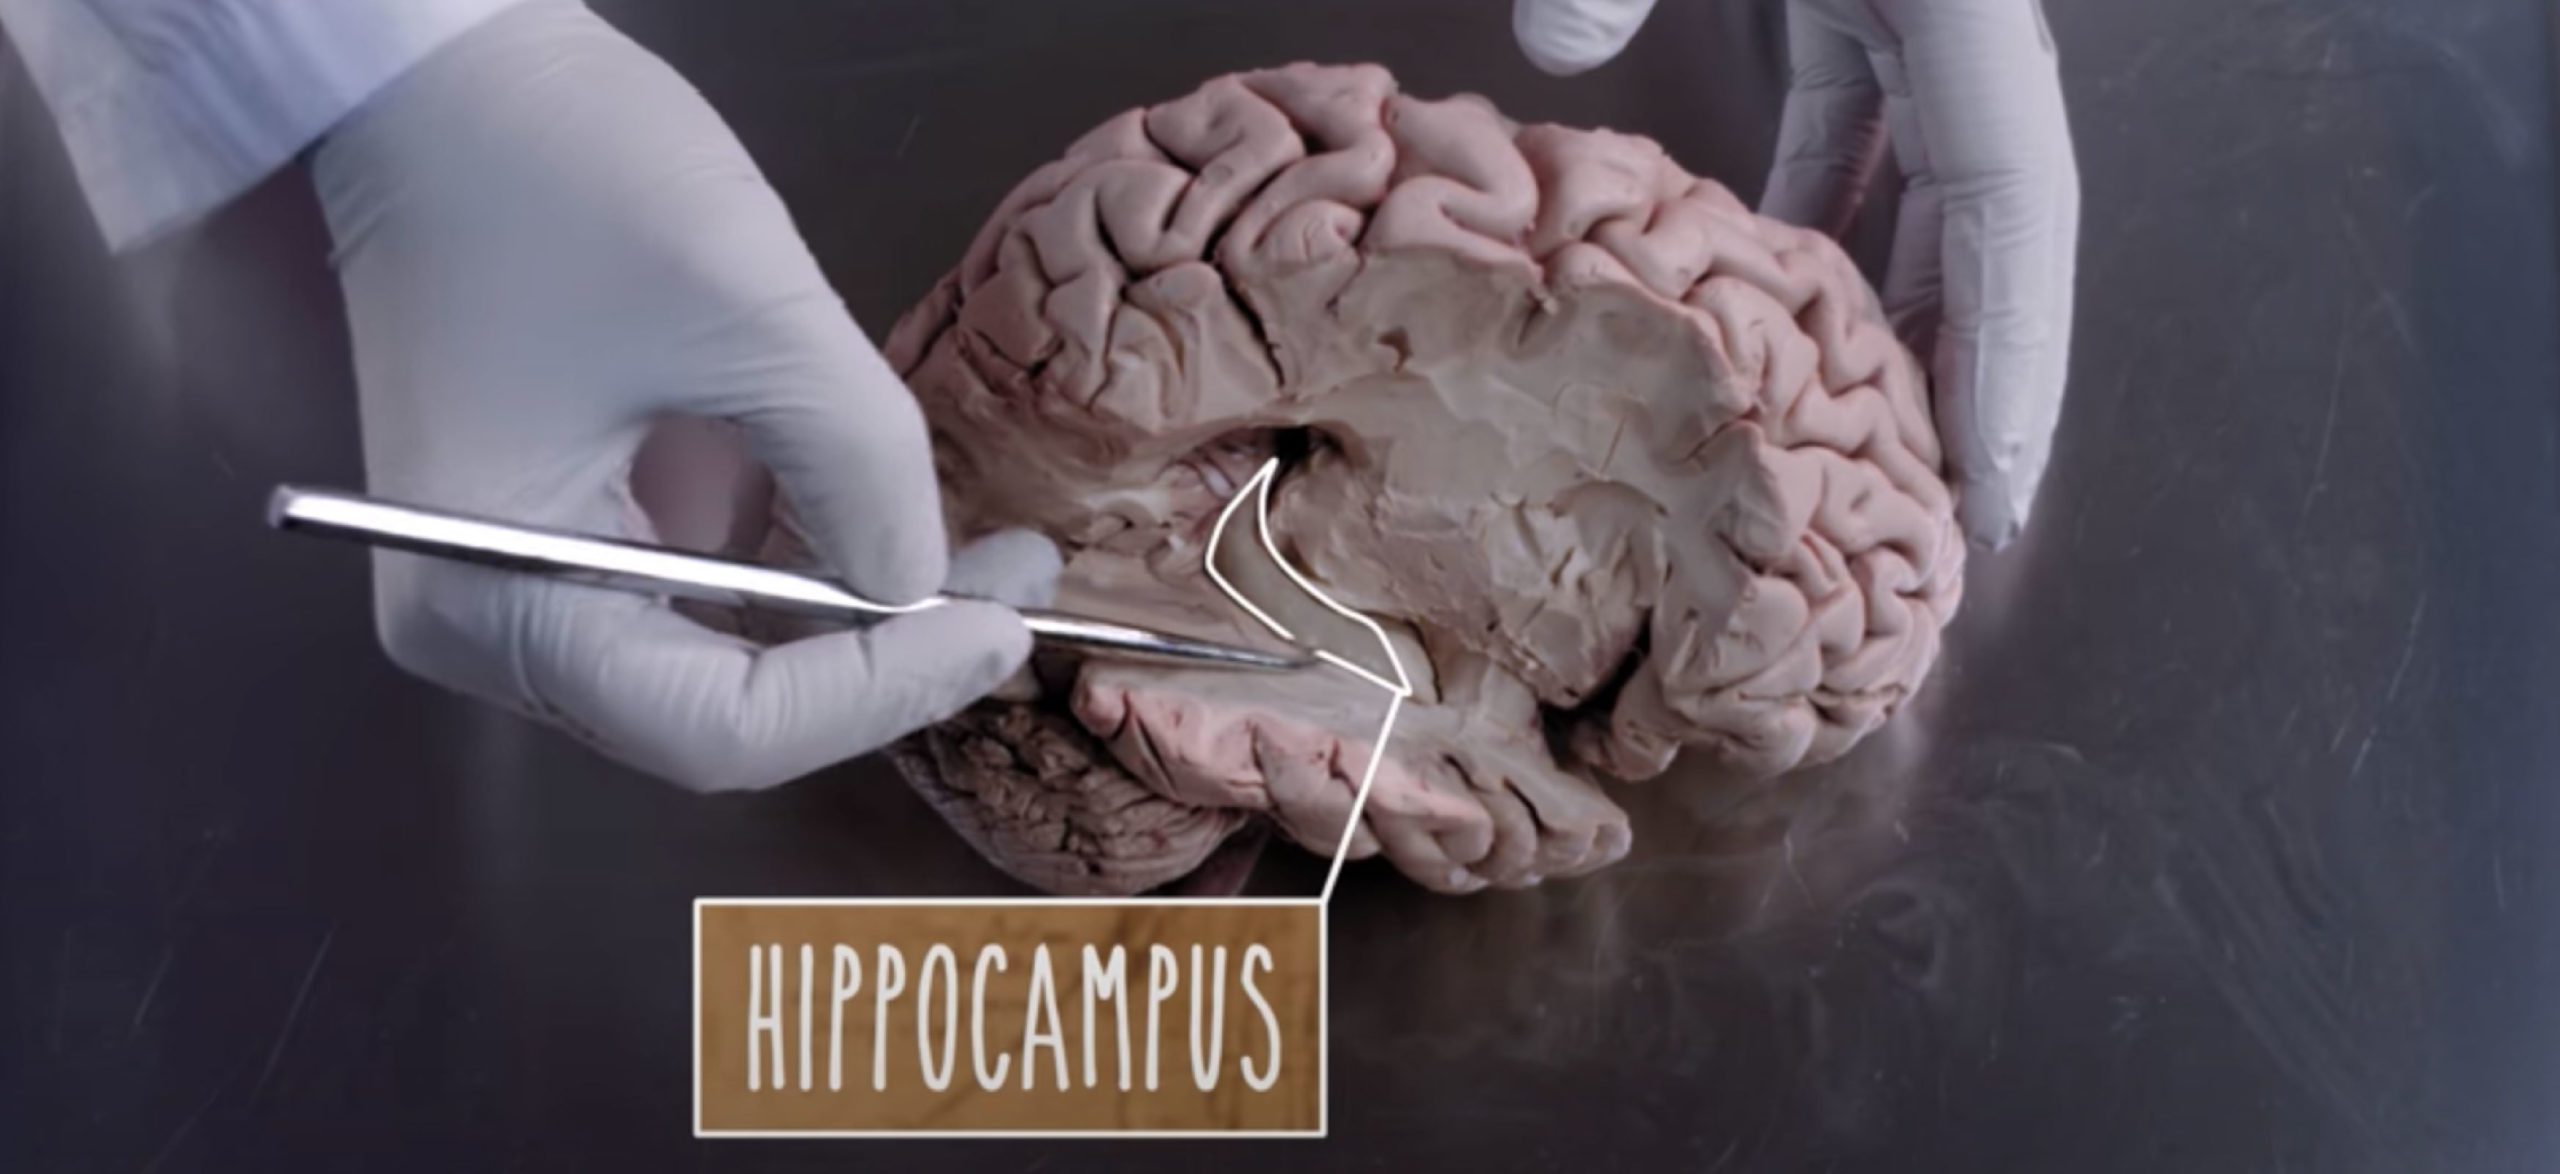 hippocampus anatomy video